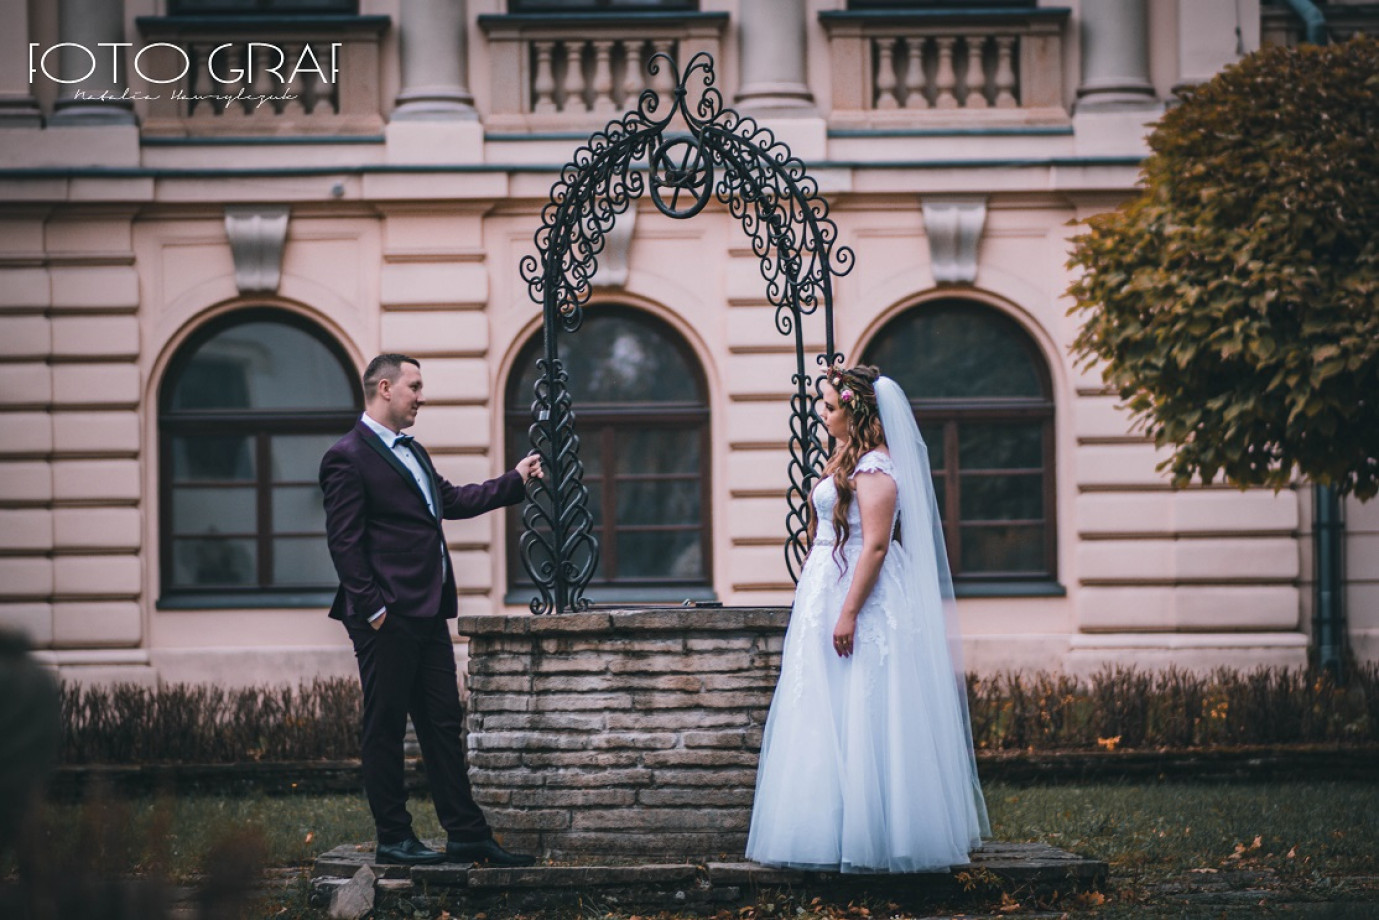 fotograf bielsko-biala foto-graf-natalia-hawrylczuk portfolio zdjecia slubne inspiracje wesele plener slubny sesja slubna